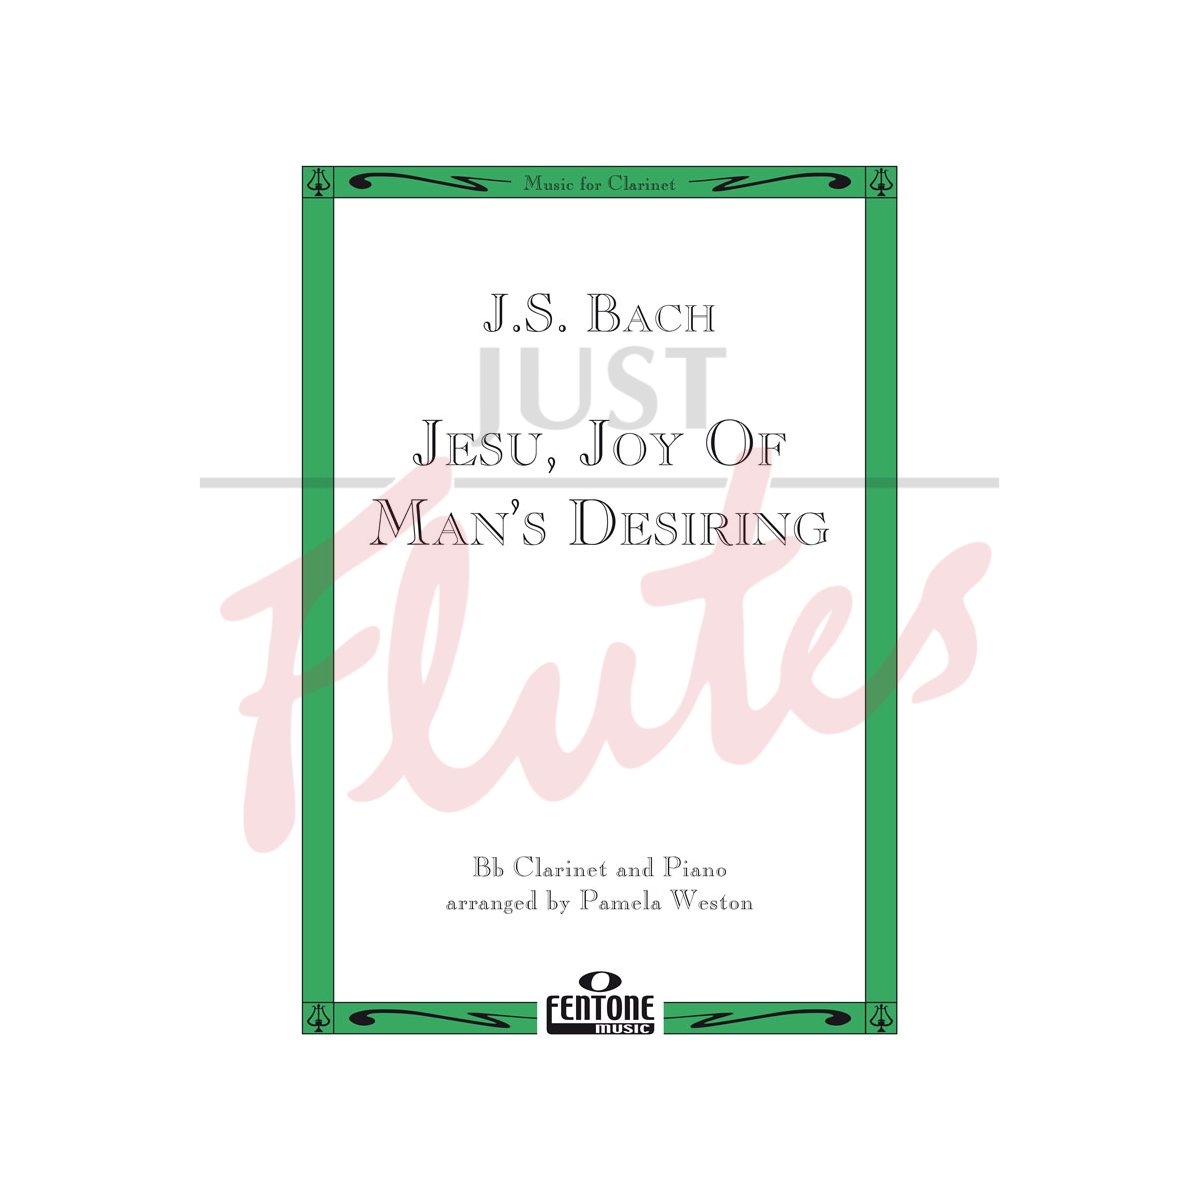 Jesu Joy of Man's Desiring [Clarinet and Piano]